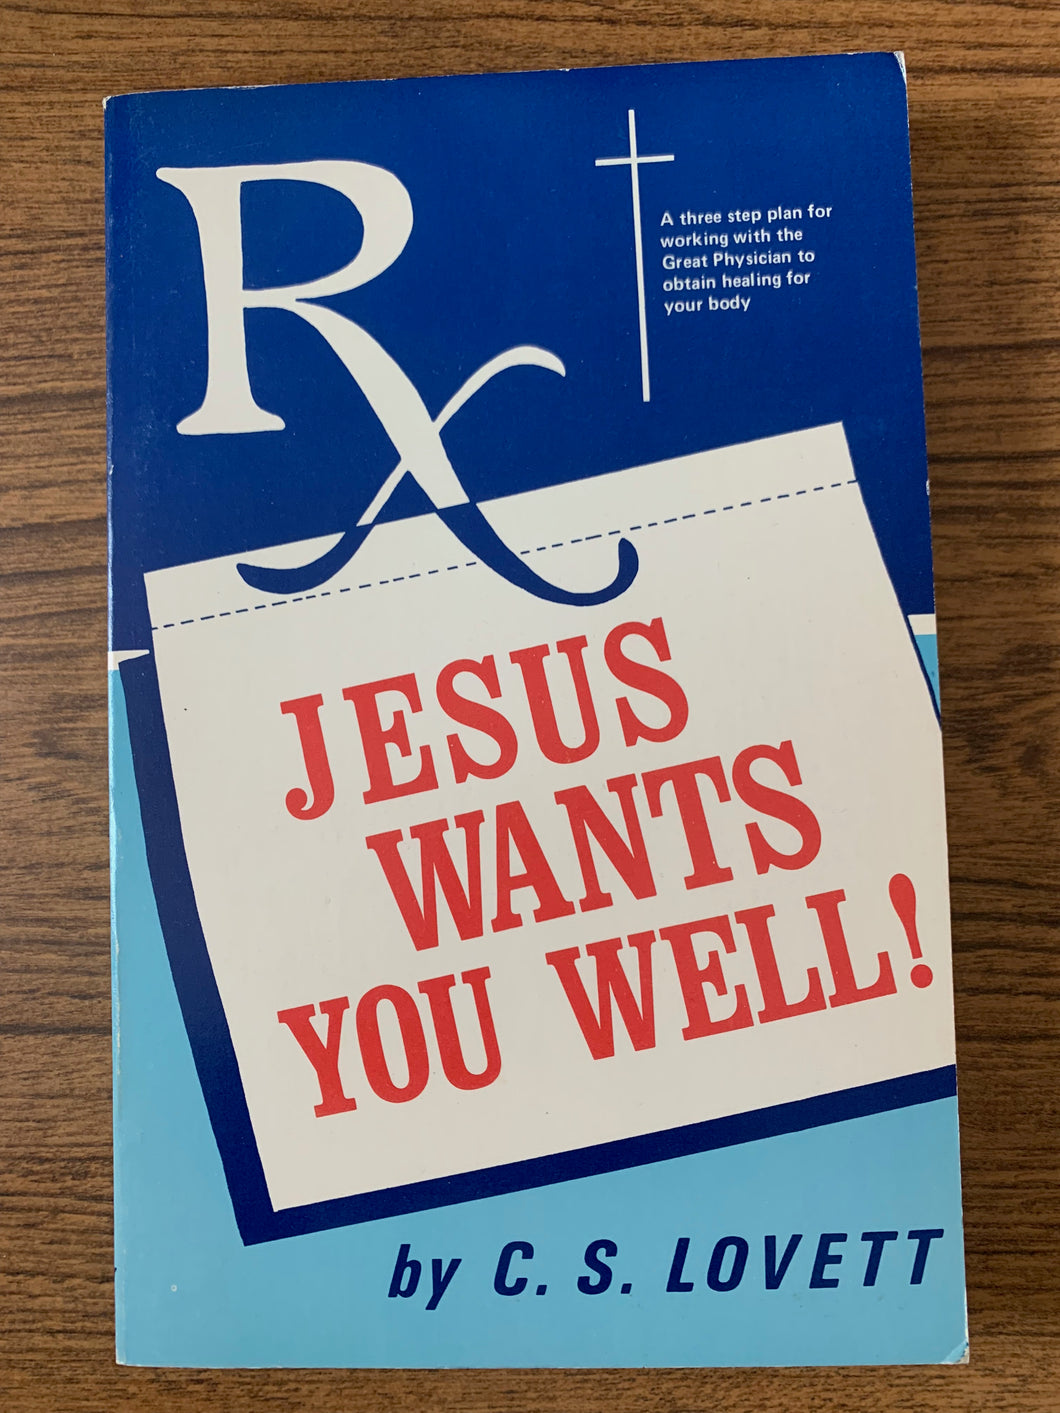 Jesus Wants You Well! by C.S. Lovett